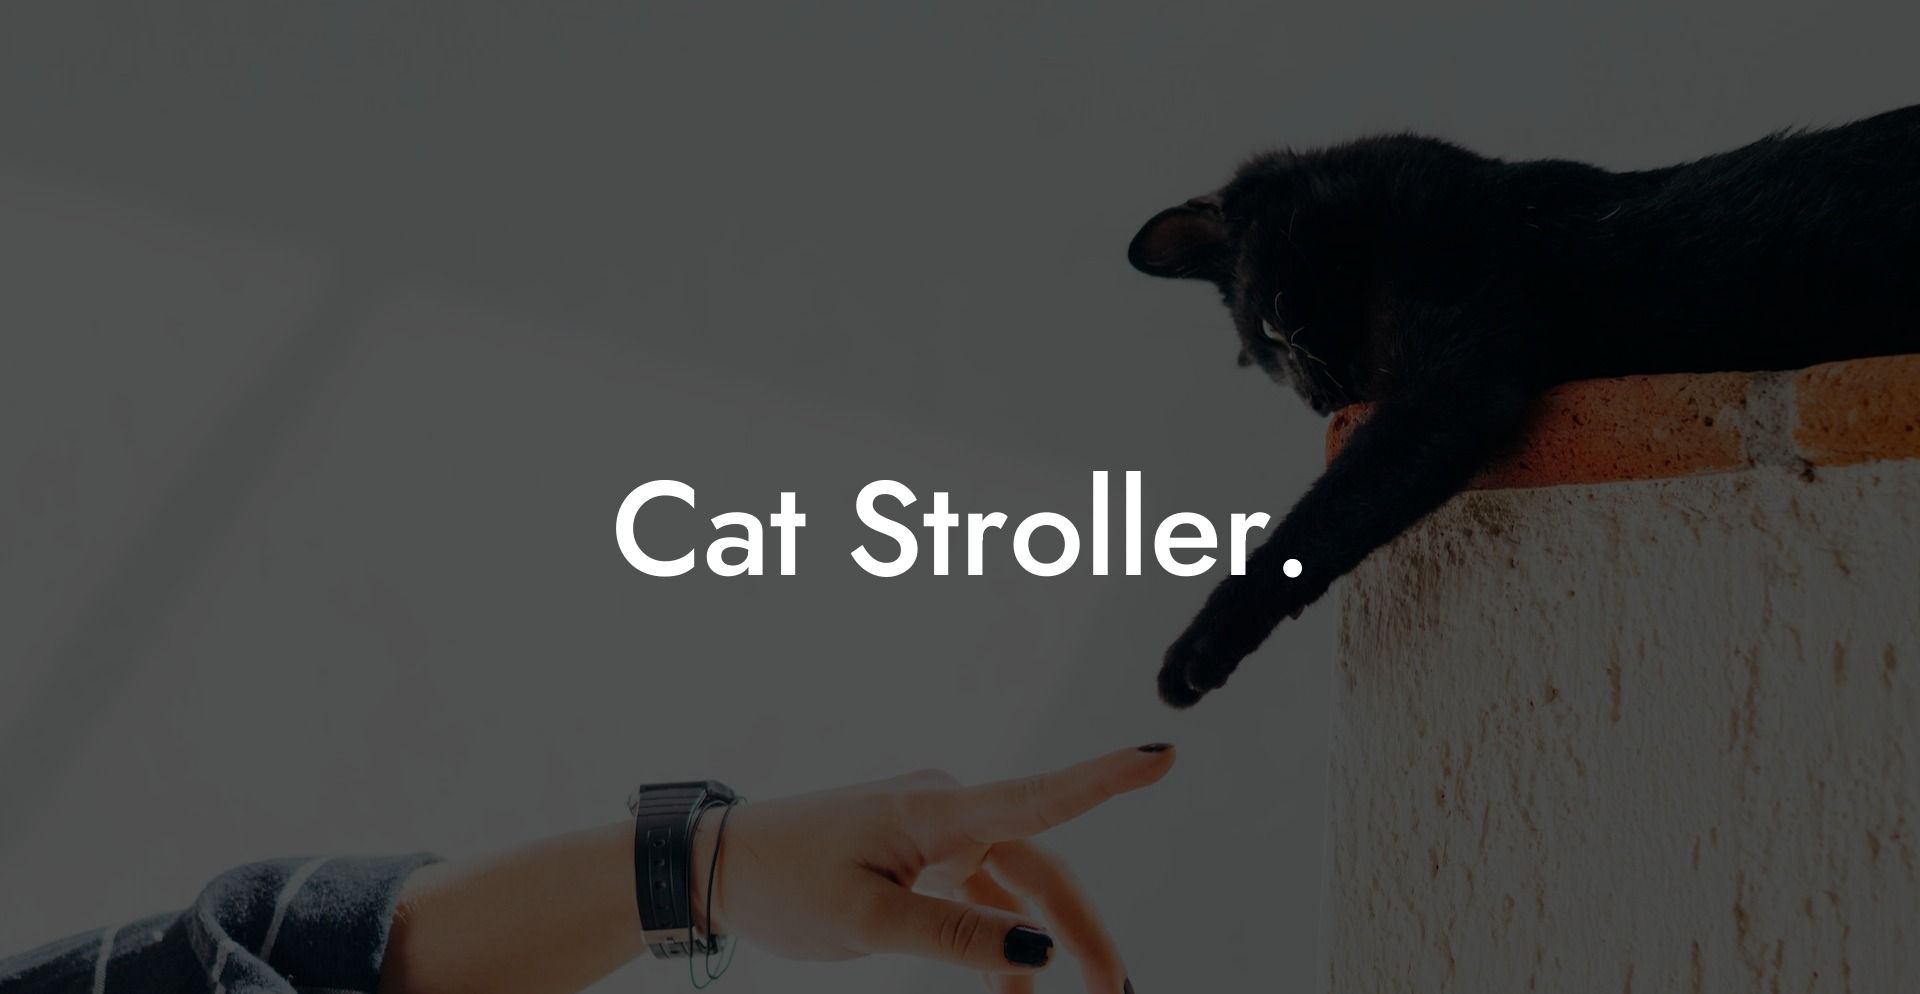 Cat Stroller,